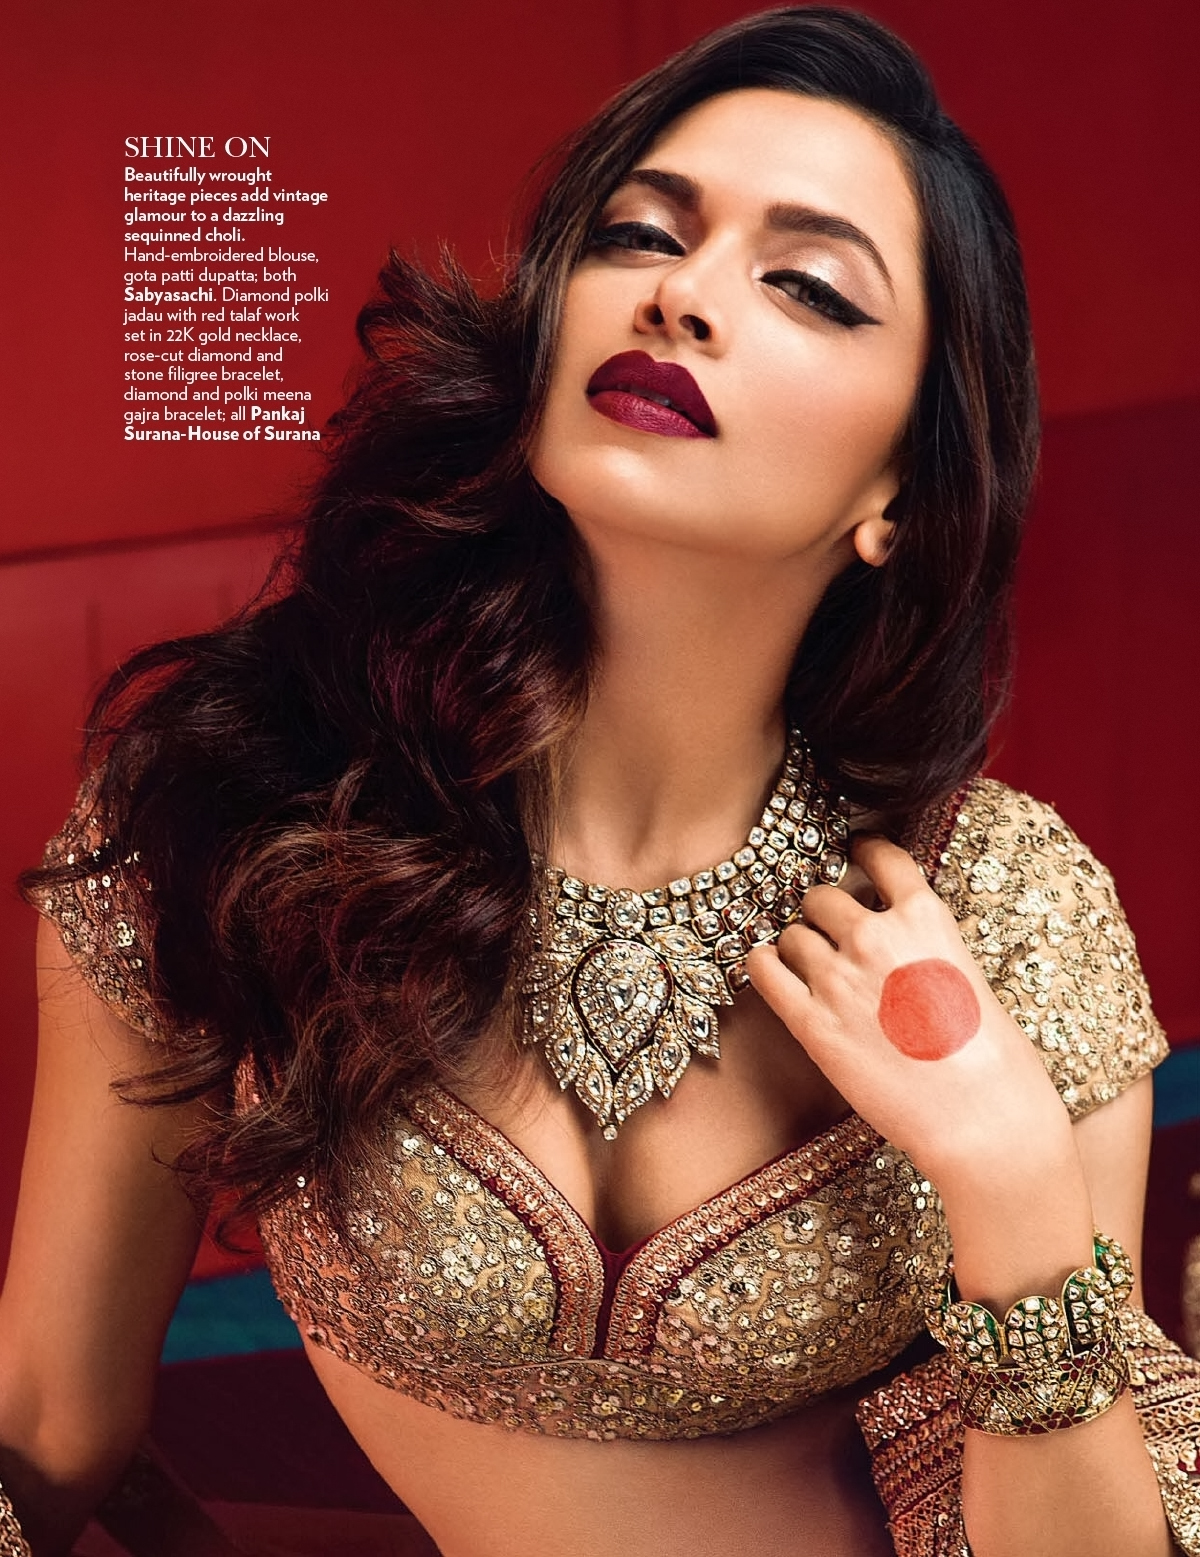 Deepika Padukone for Vogue India